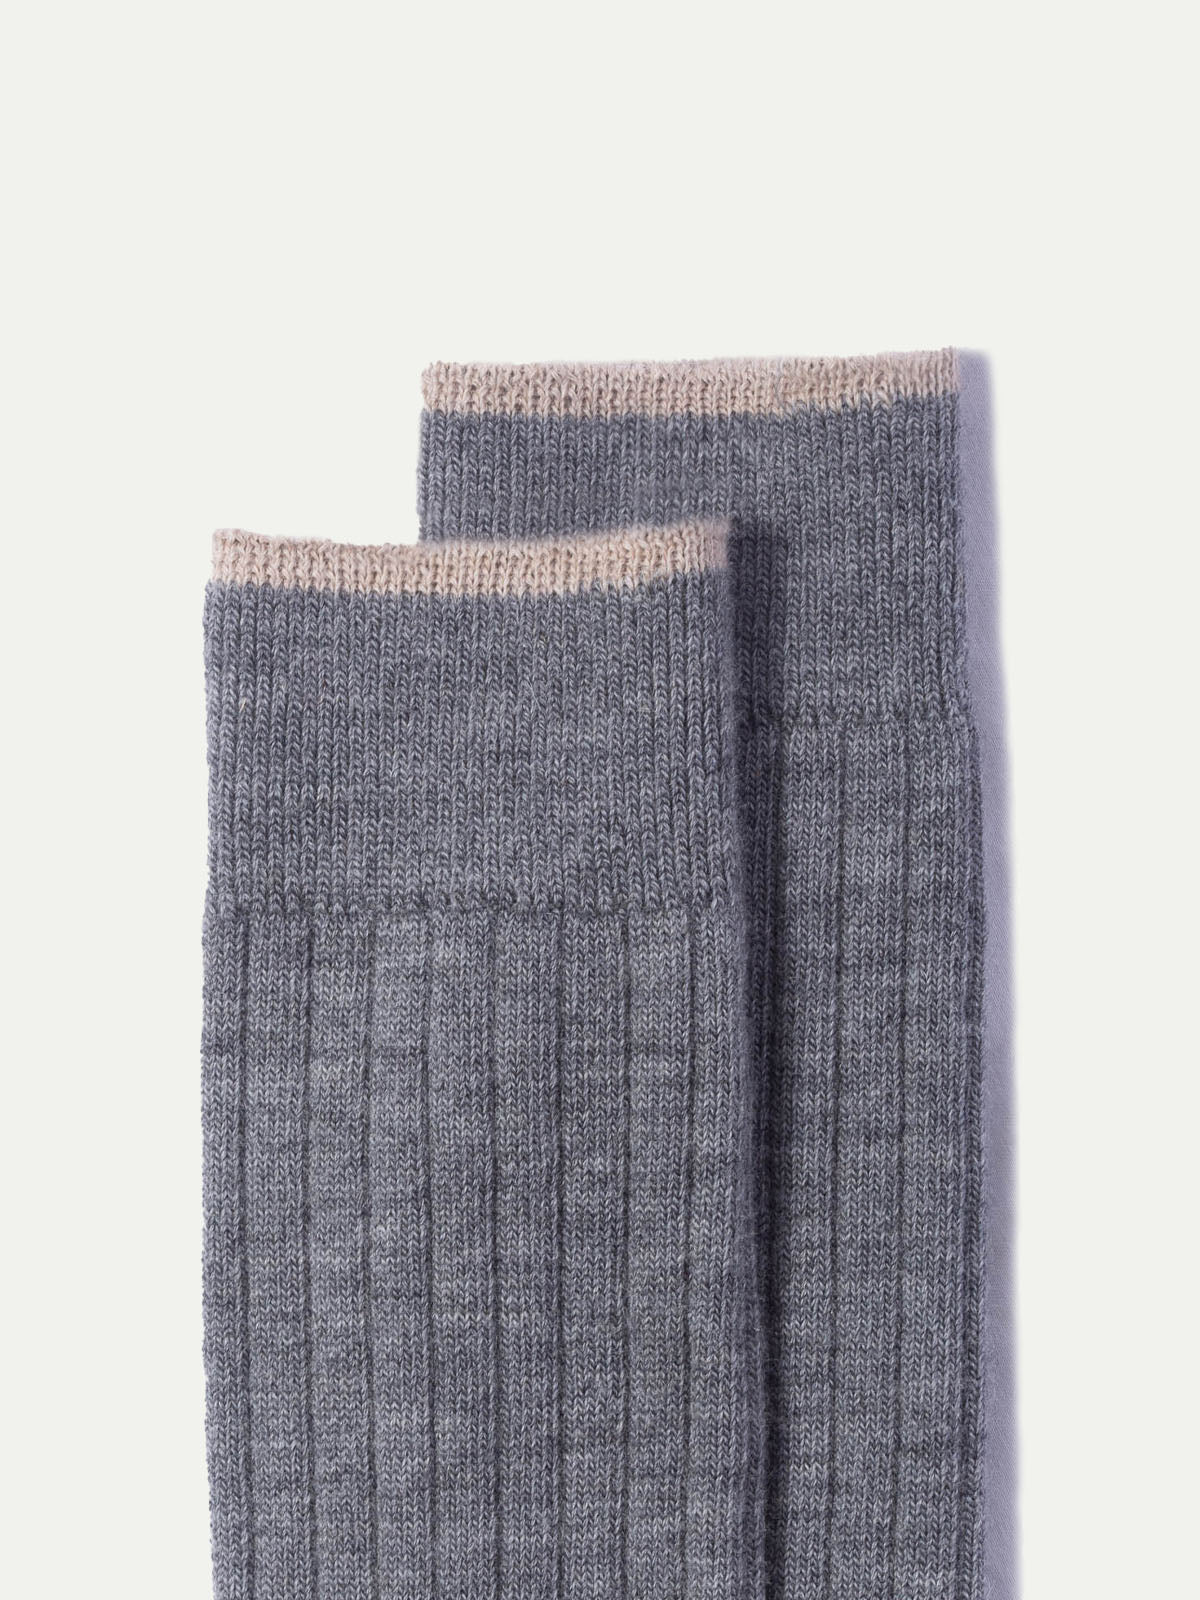 Light grey - Super durable Wool short socks - Made in Italy